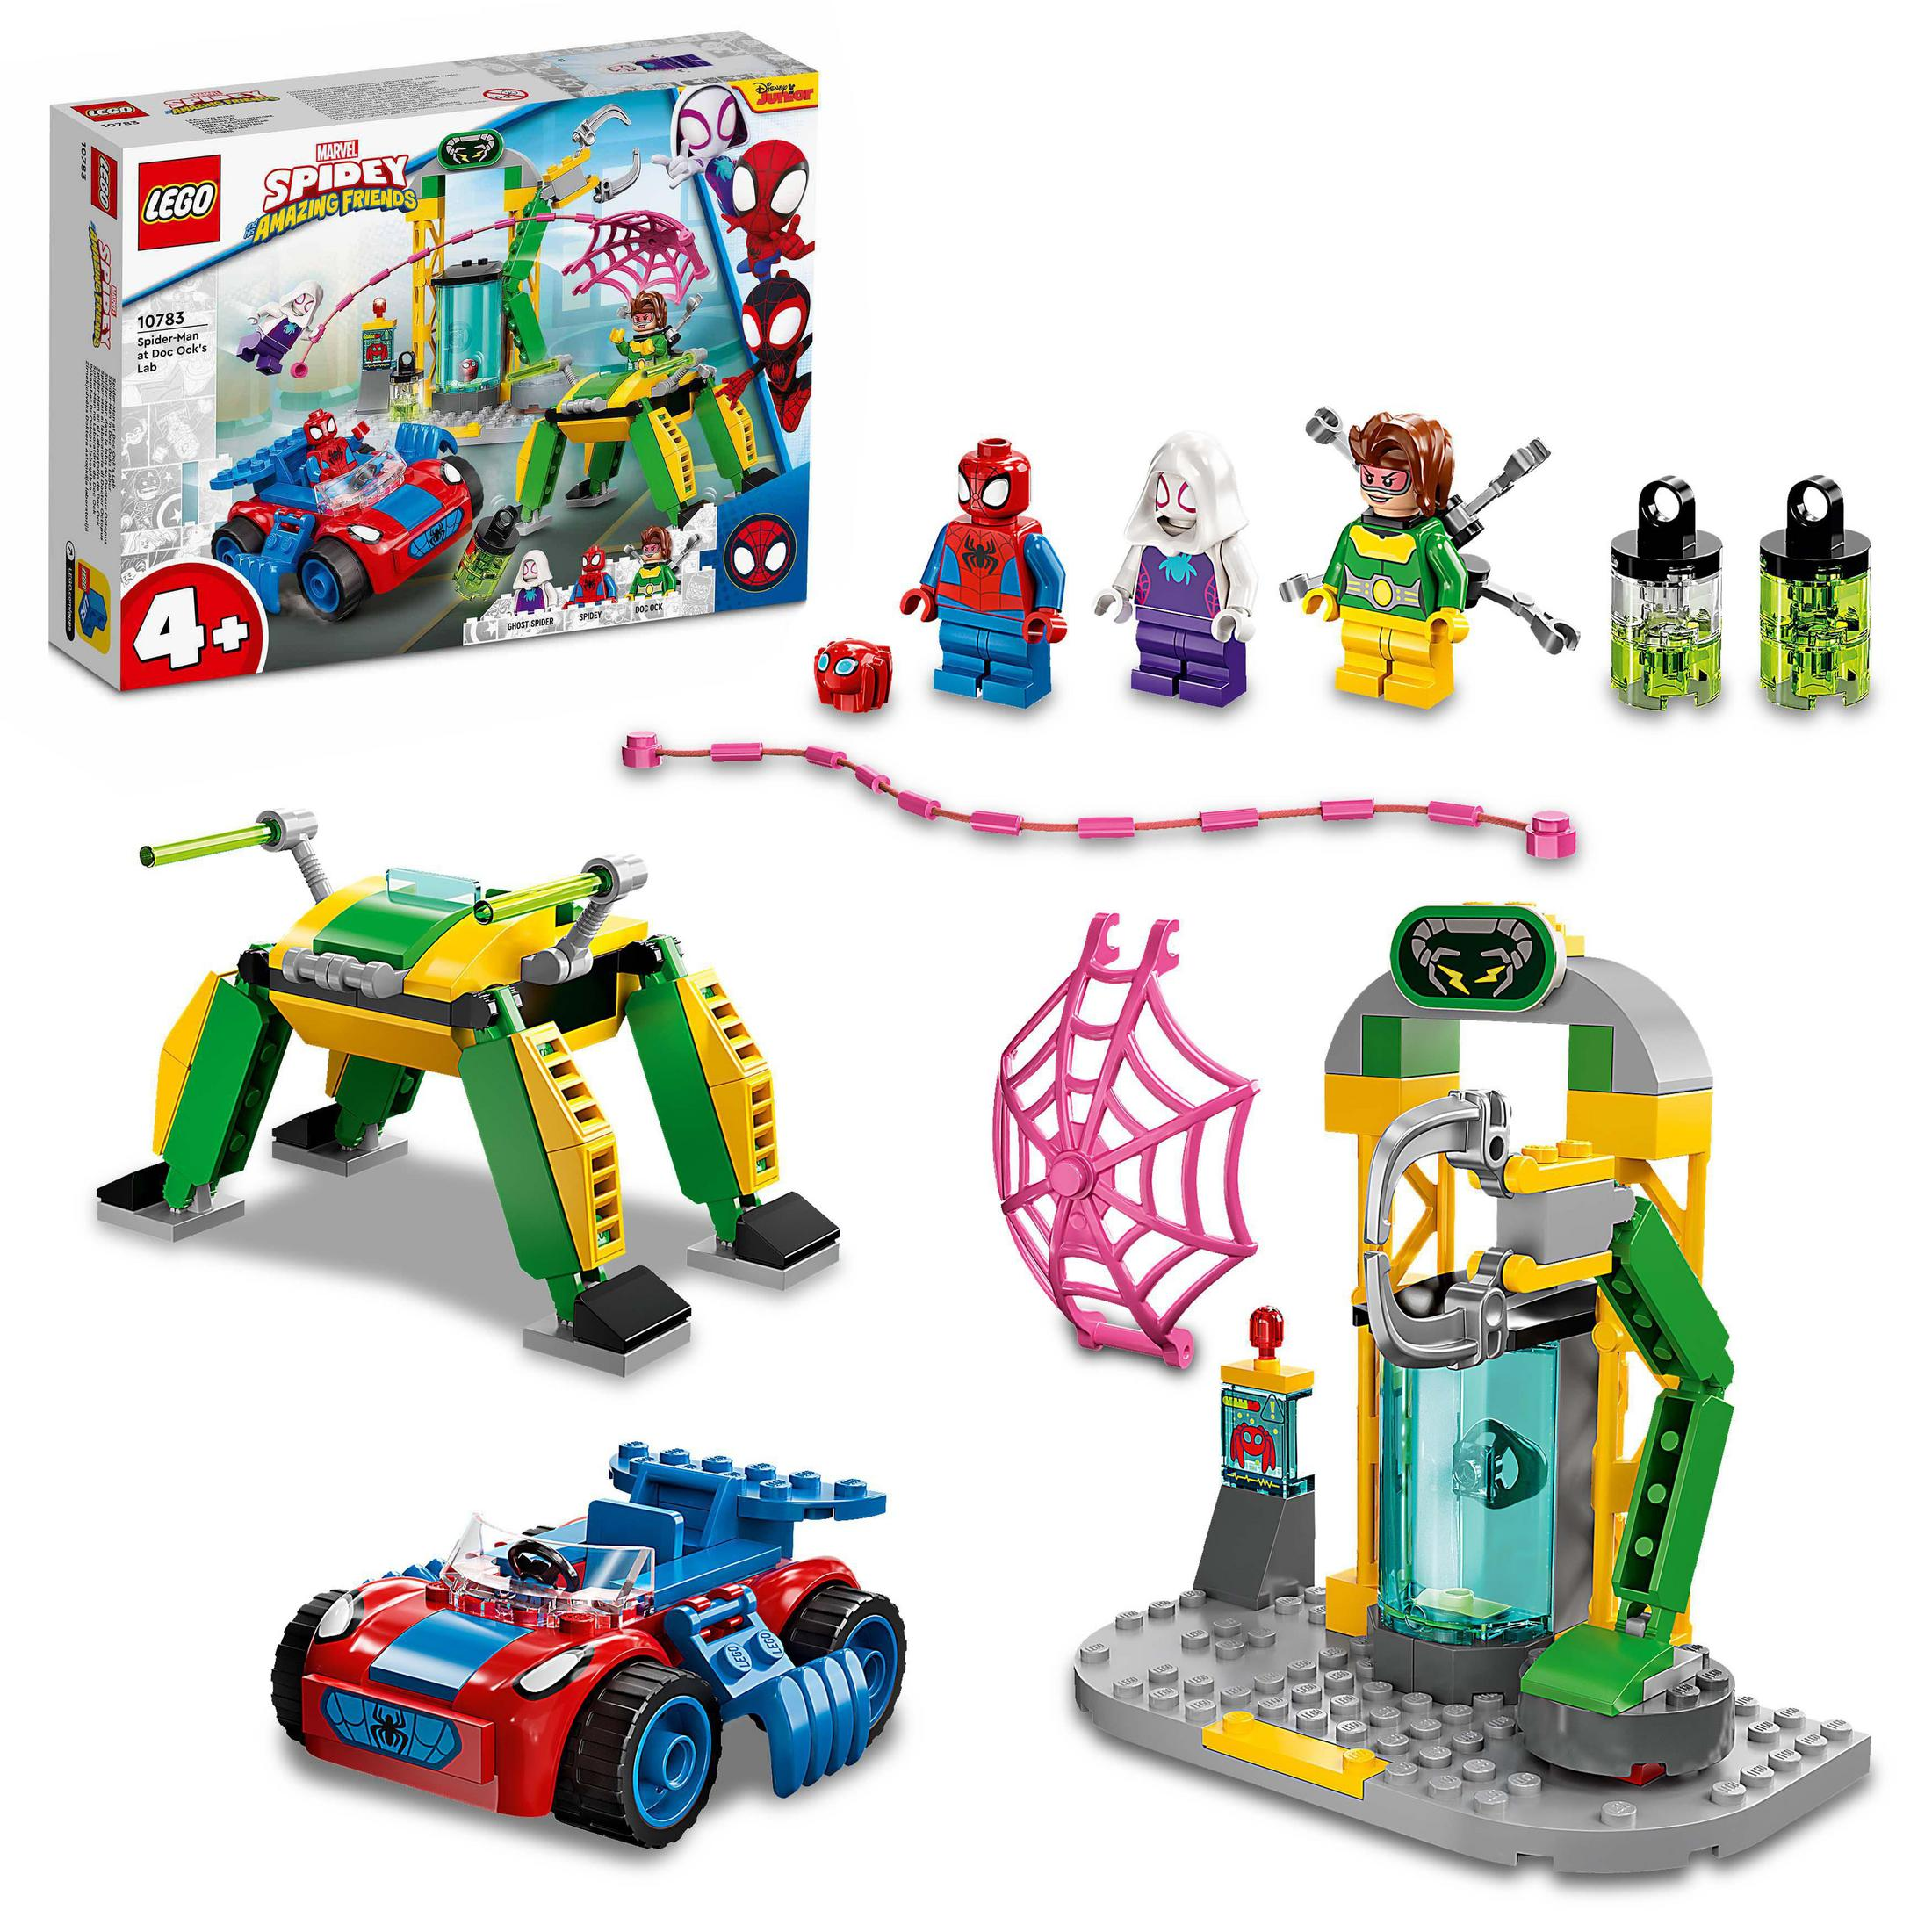 LEGO 10783 SPIDER-MAN LABOR Mehrfarbig OCKS Bausatz, DOC IN